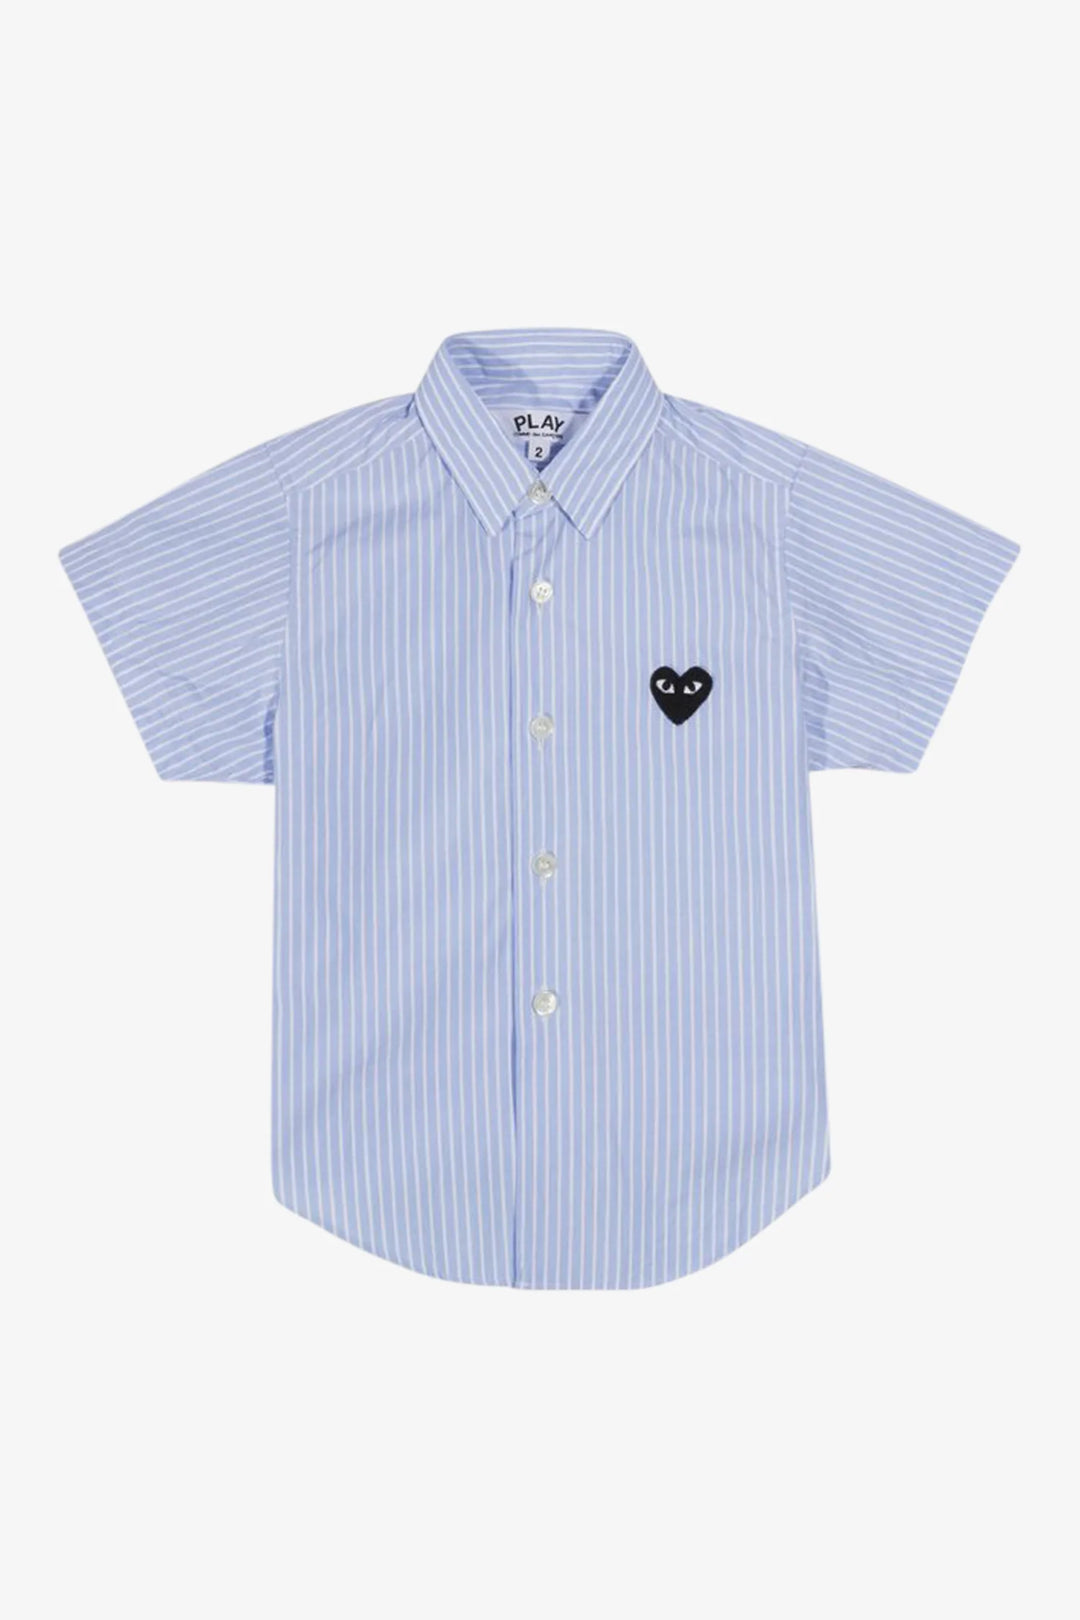 Comme Des Garcons Kids For Children Striped Short Sleeve Shirt - Blue - AZ-B521-100